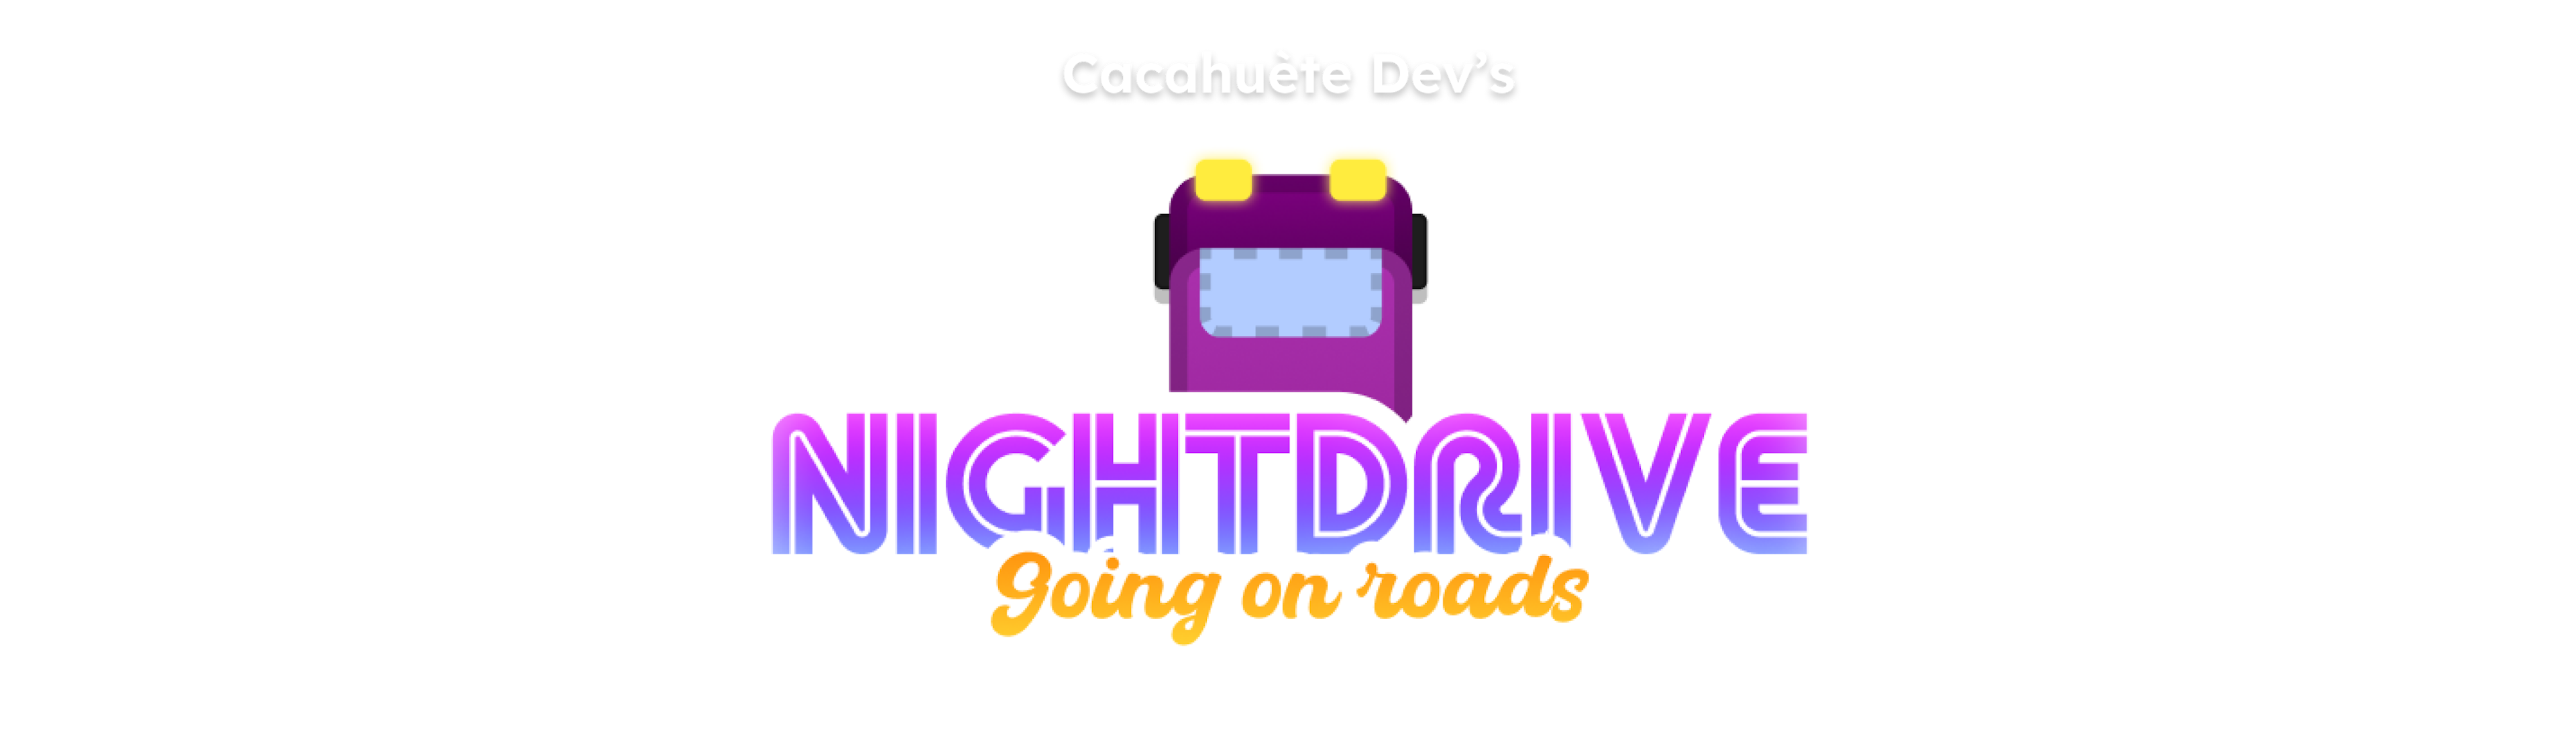 Nightdrive: Going on Roads